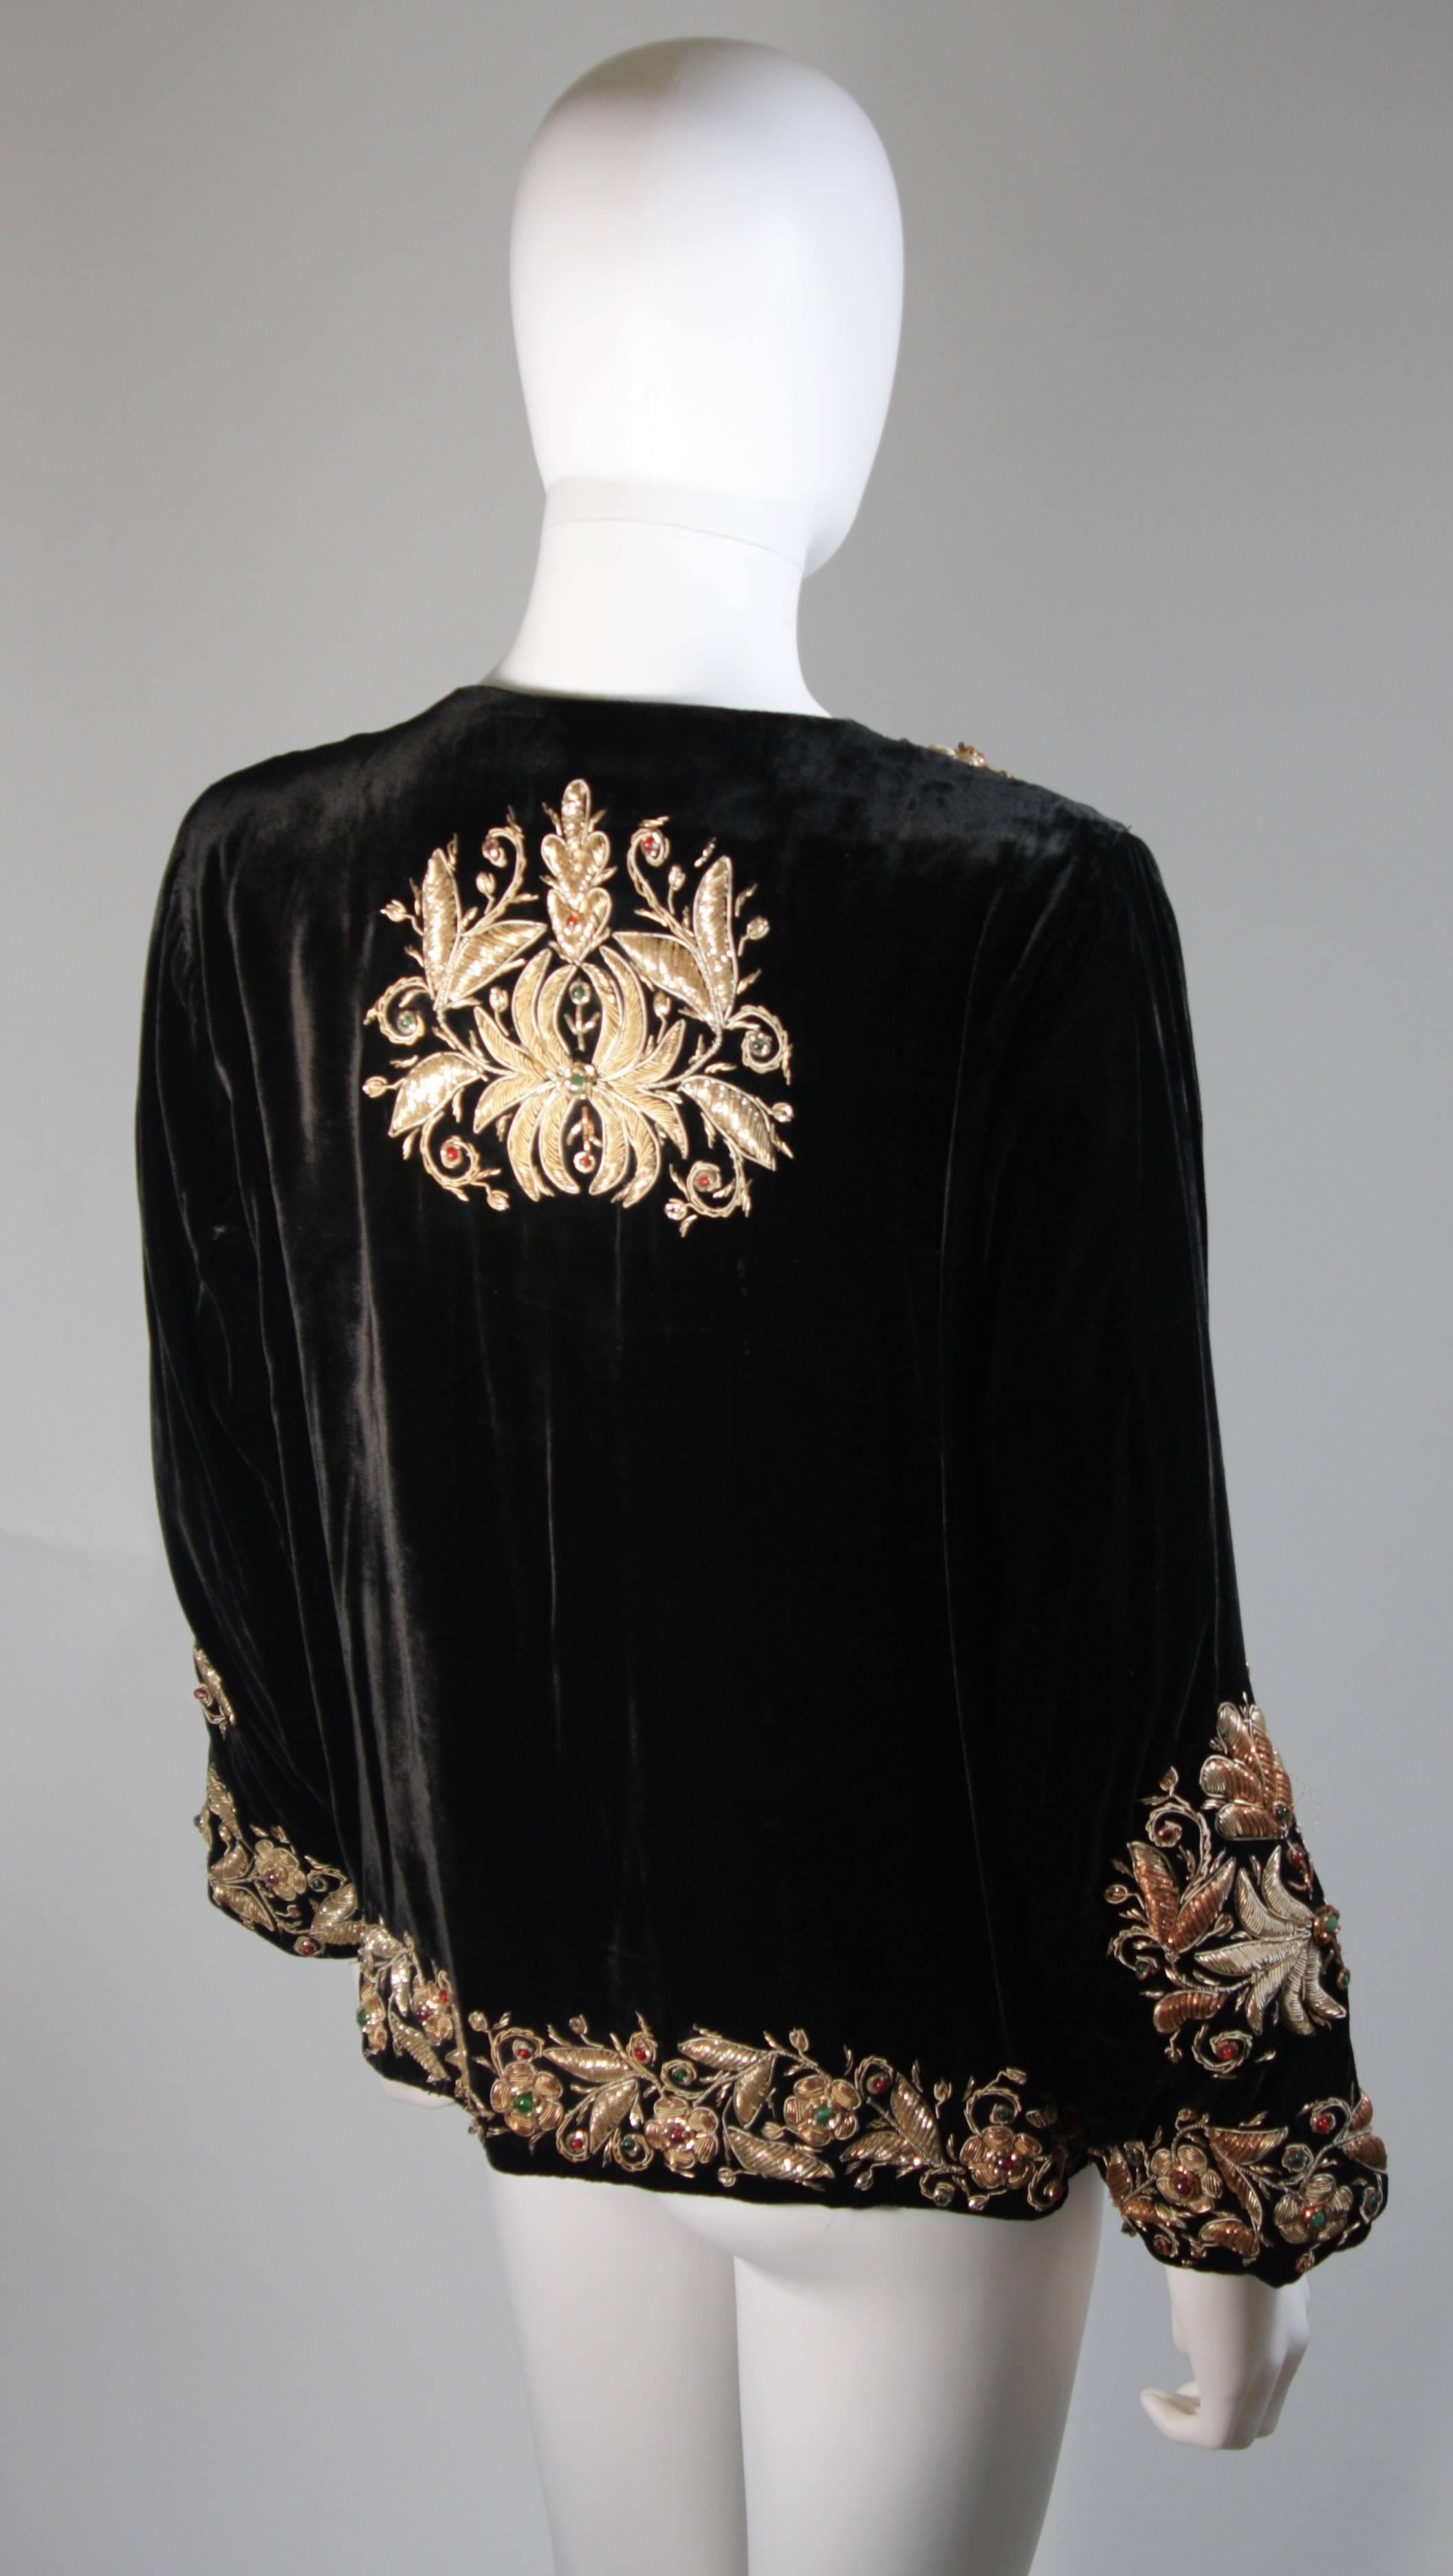 Velvet Jacket with Metallic Embroidery and Embellishment Size Small Medium Large 1